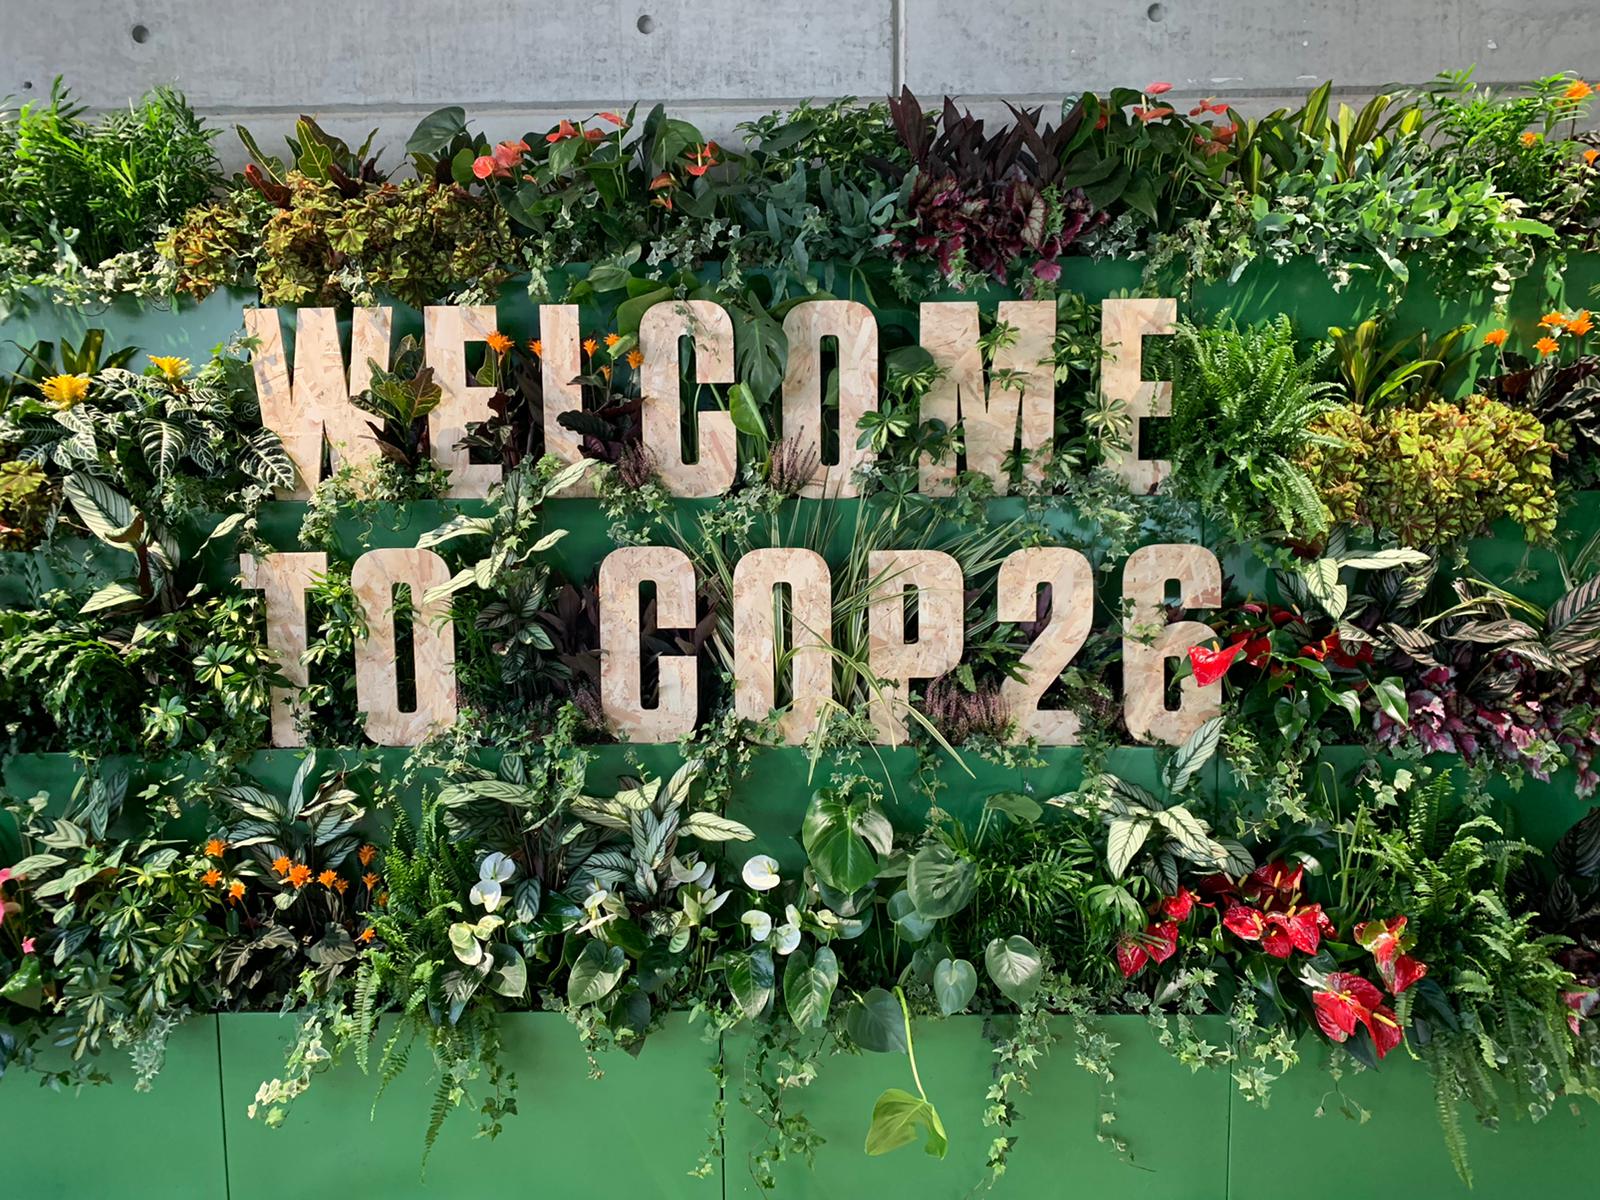 COP26 cover photo 2021